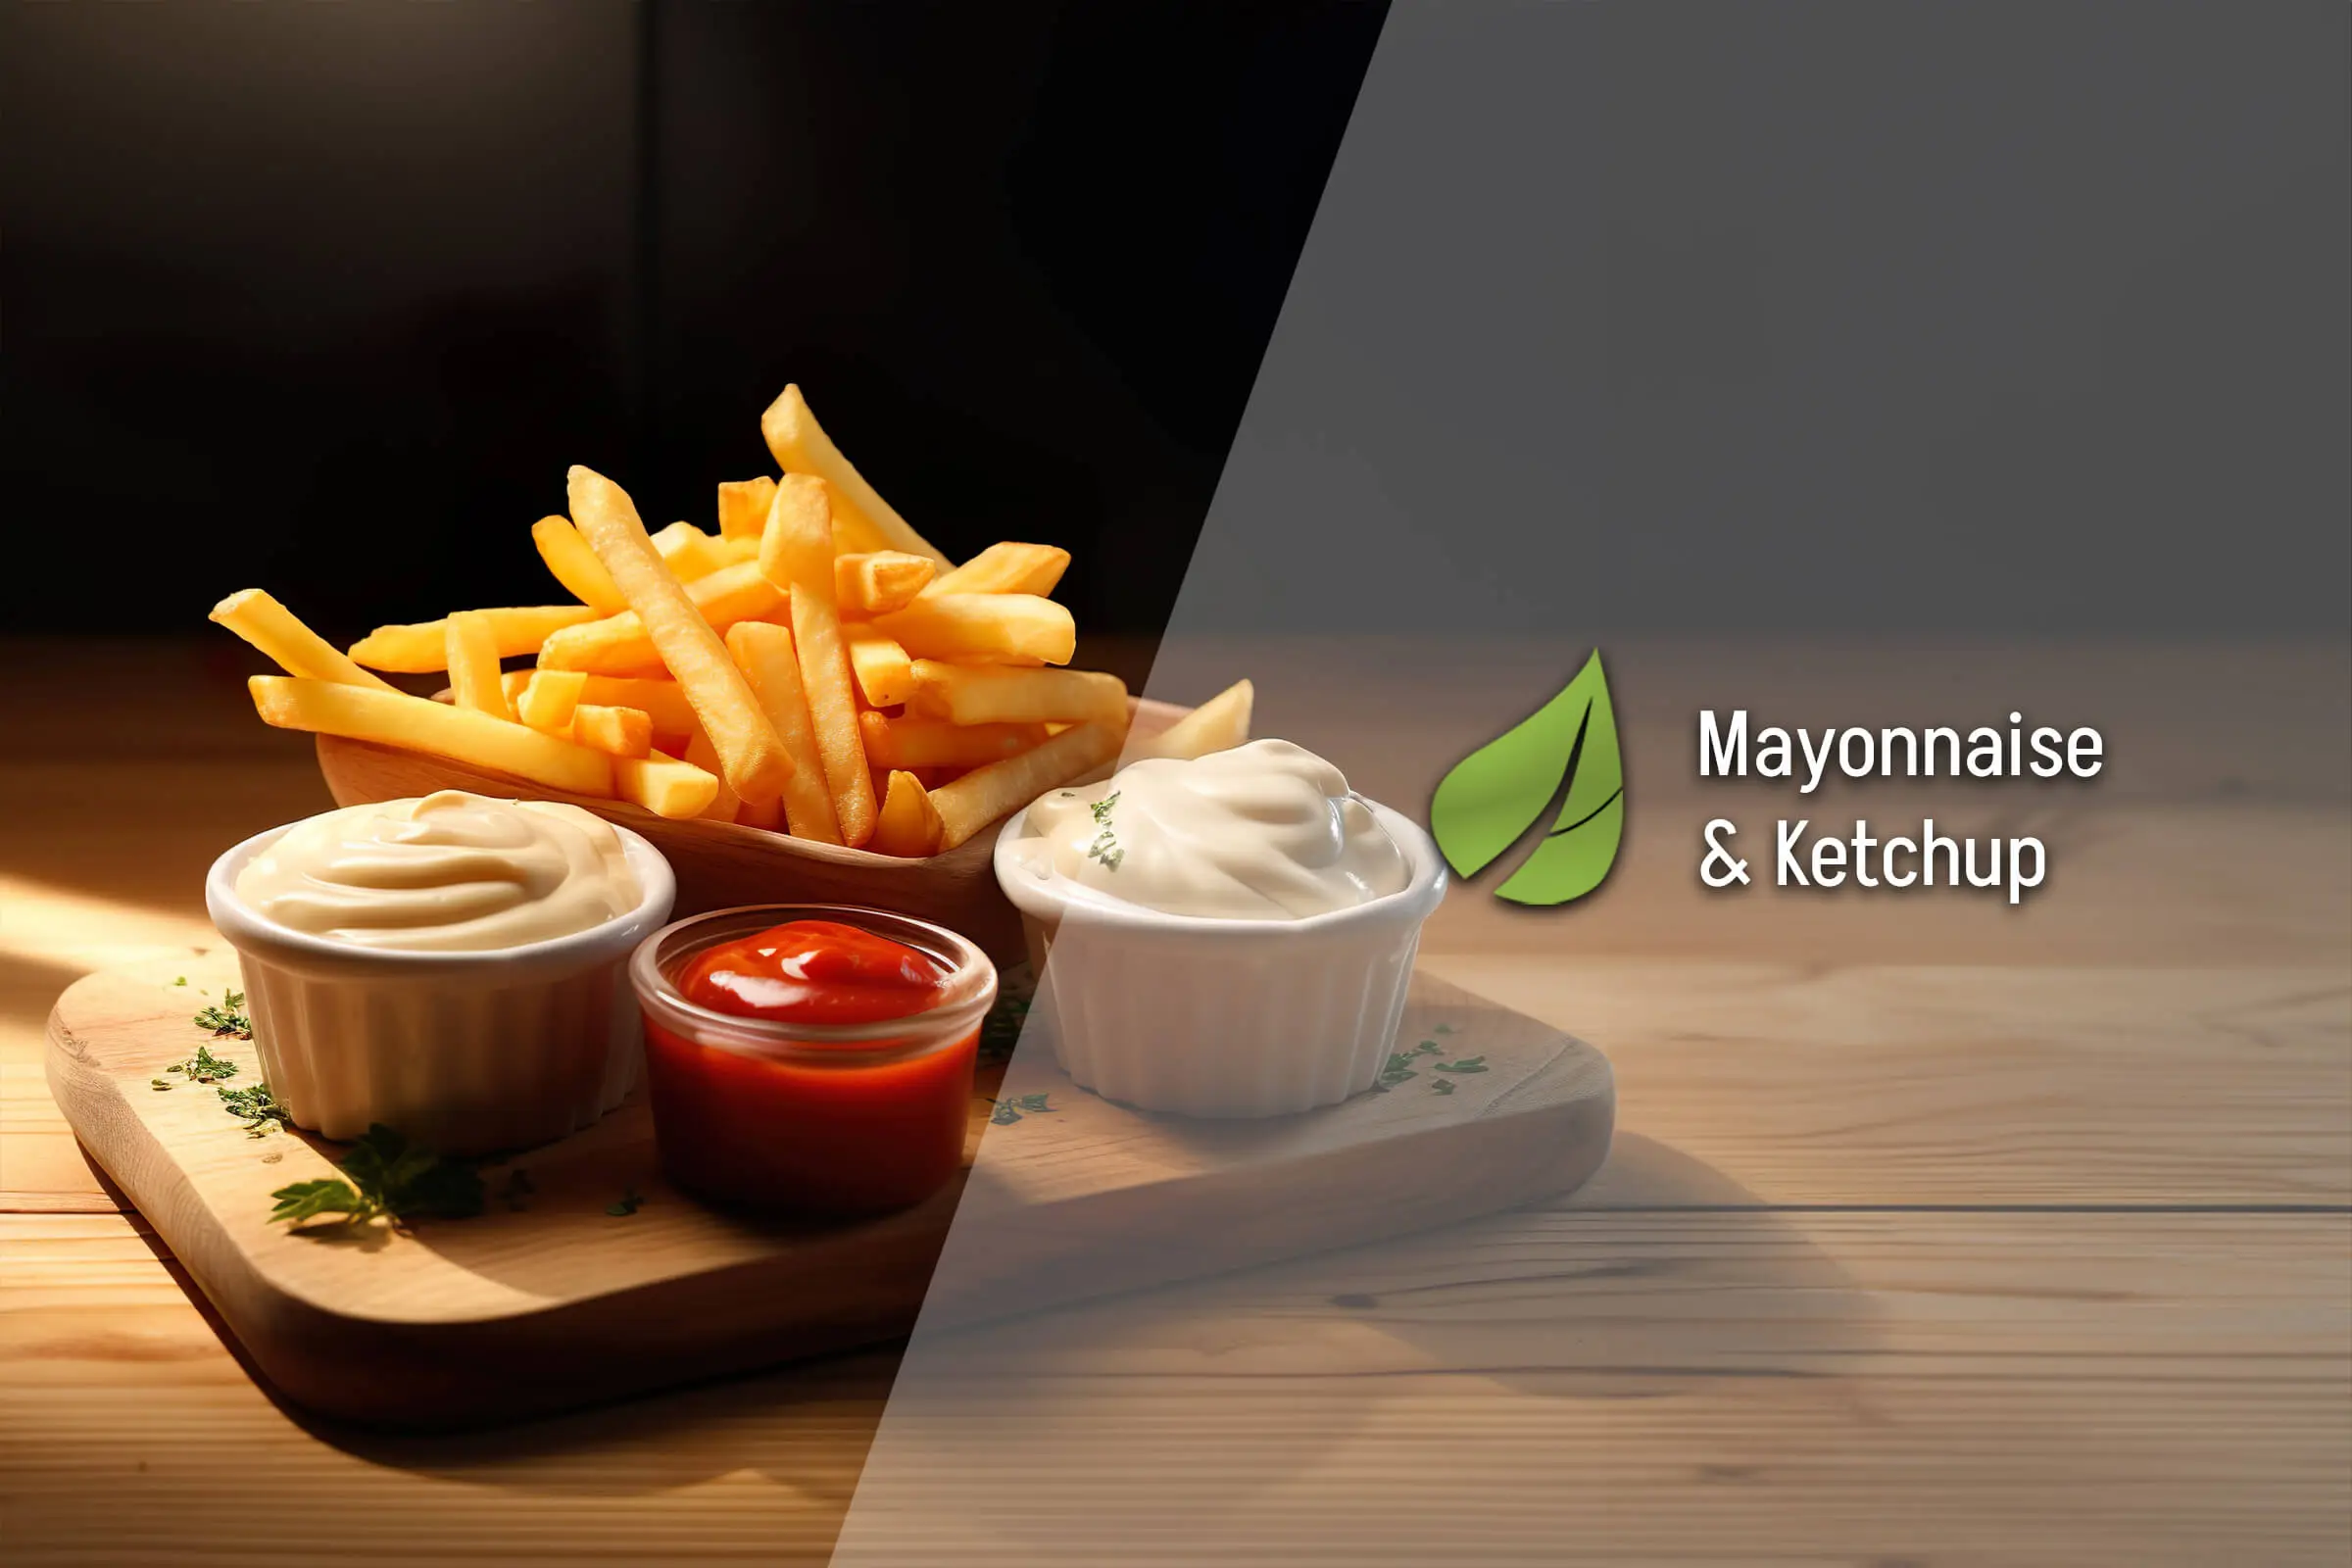 Mayonnaise & Ketchup products by Createc